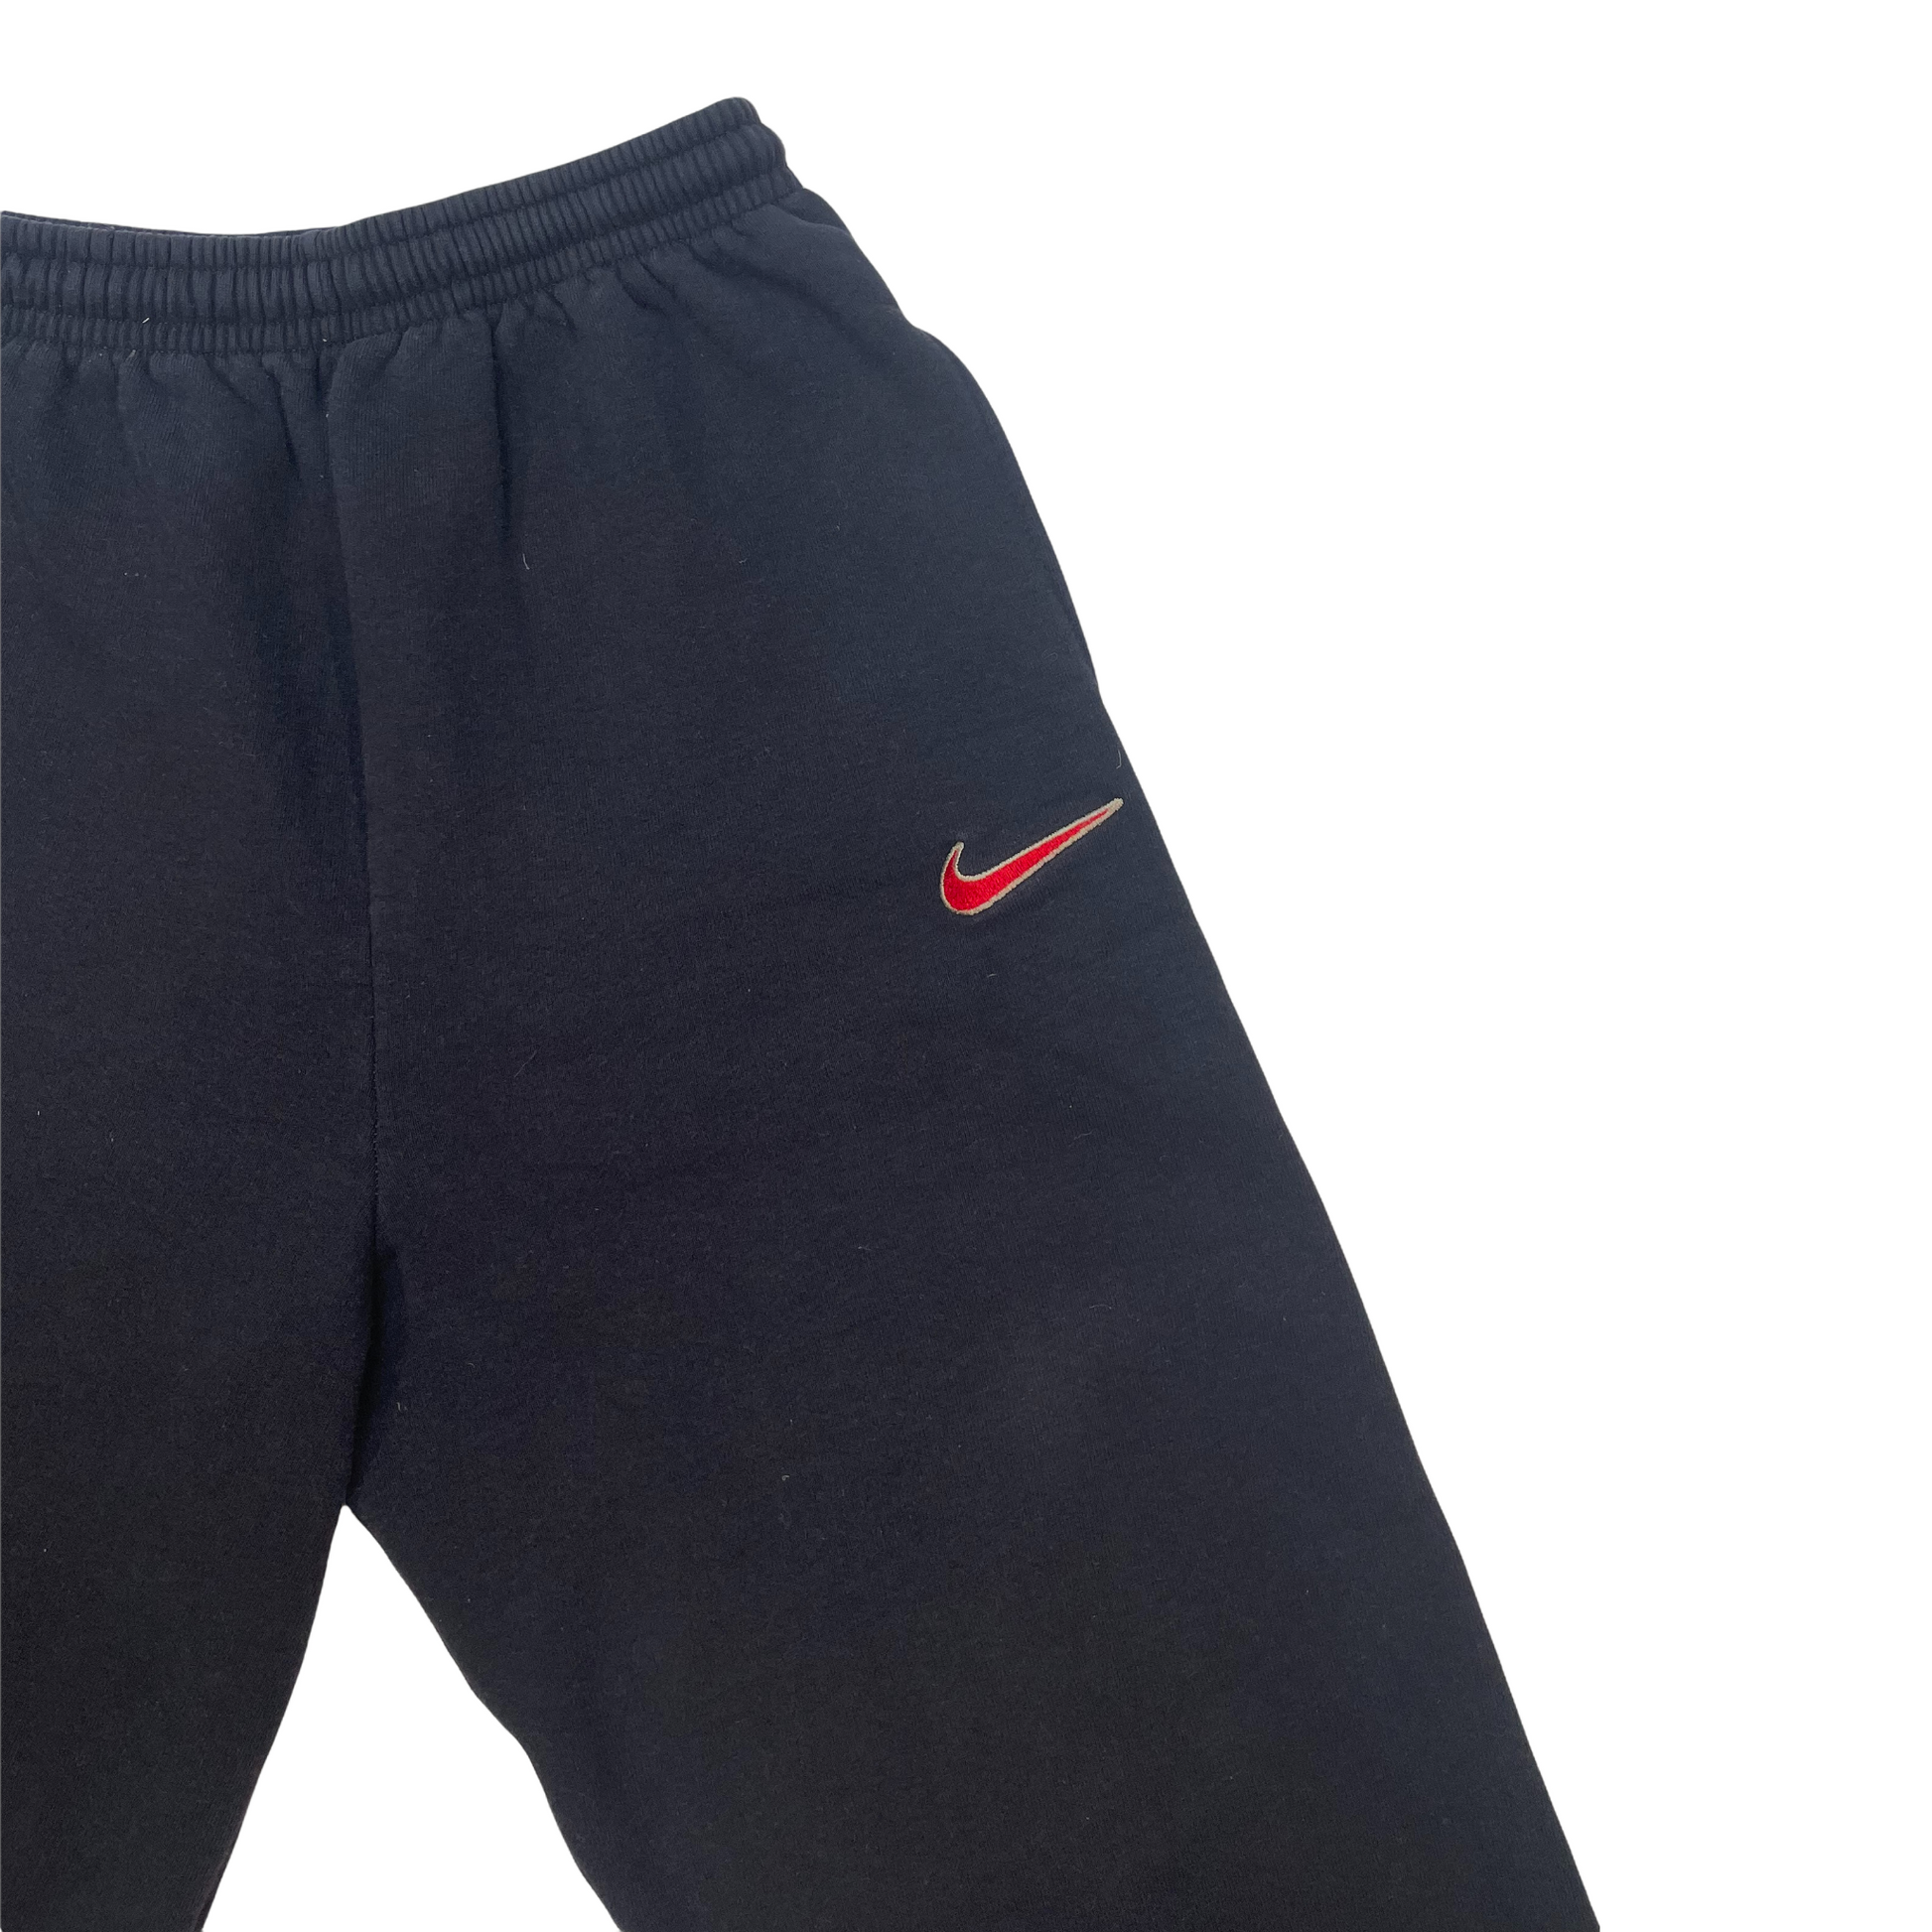 S Vintage Nike Sweatpants